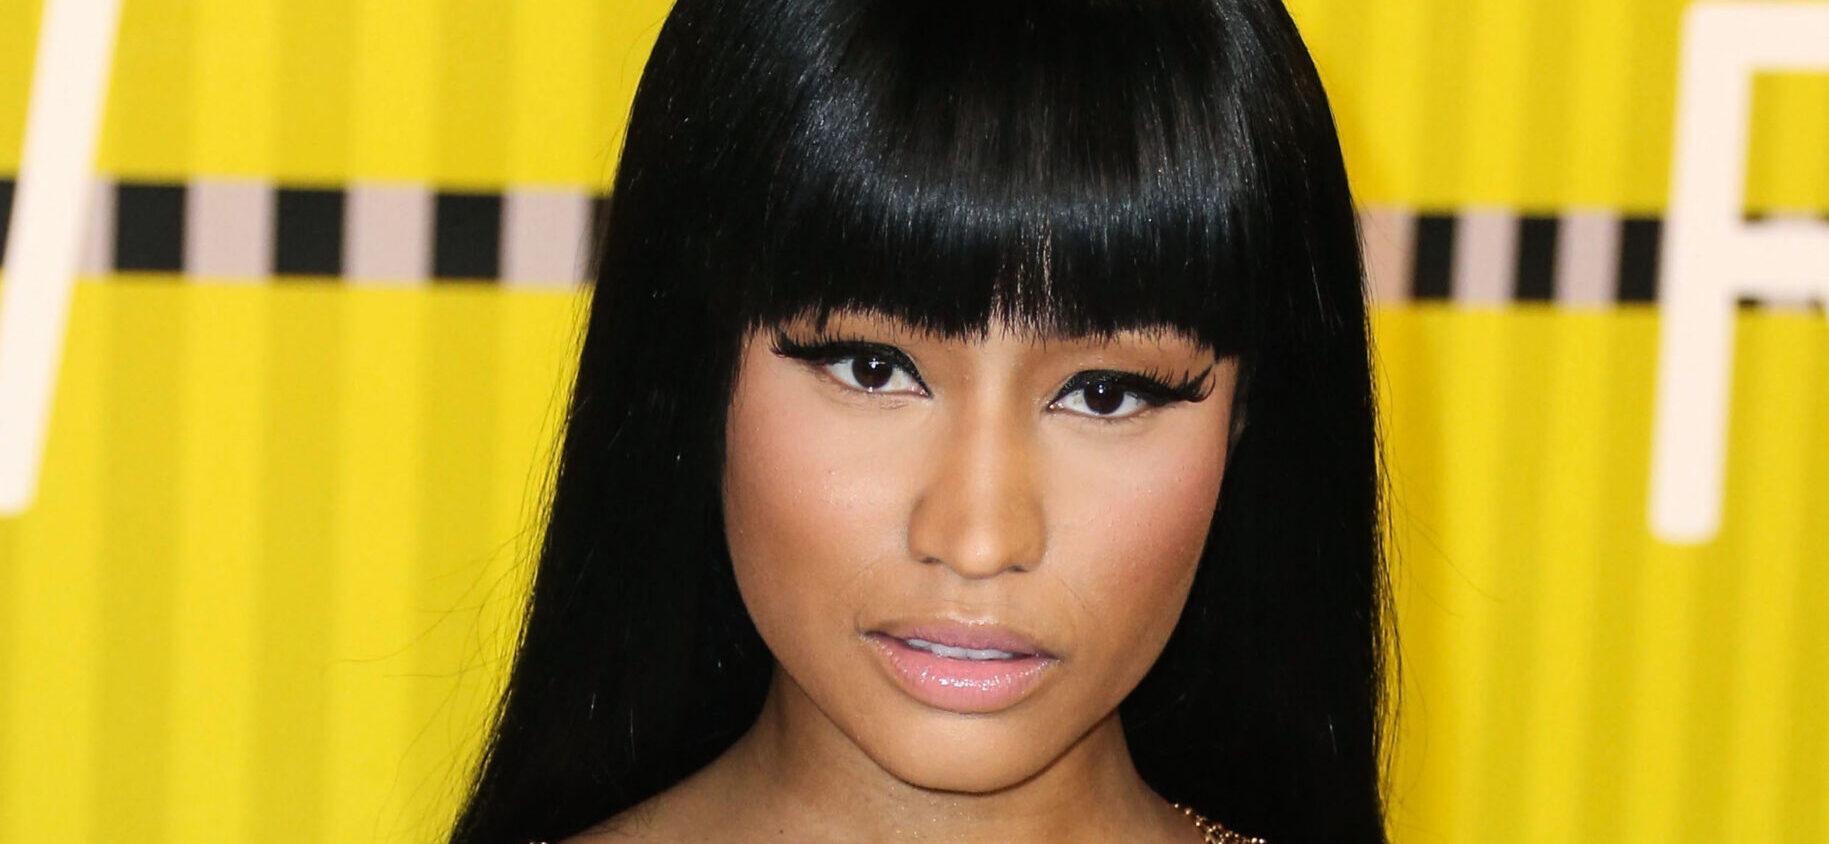 Nicki Minaj Released After Being Detained For Alleged Drug Possession